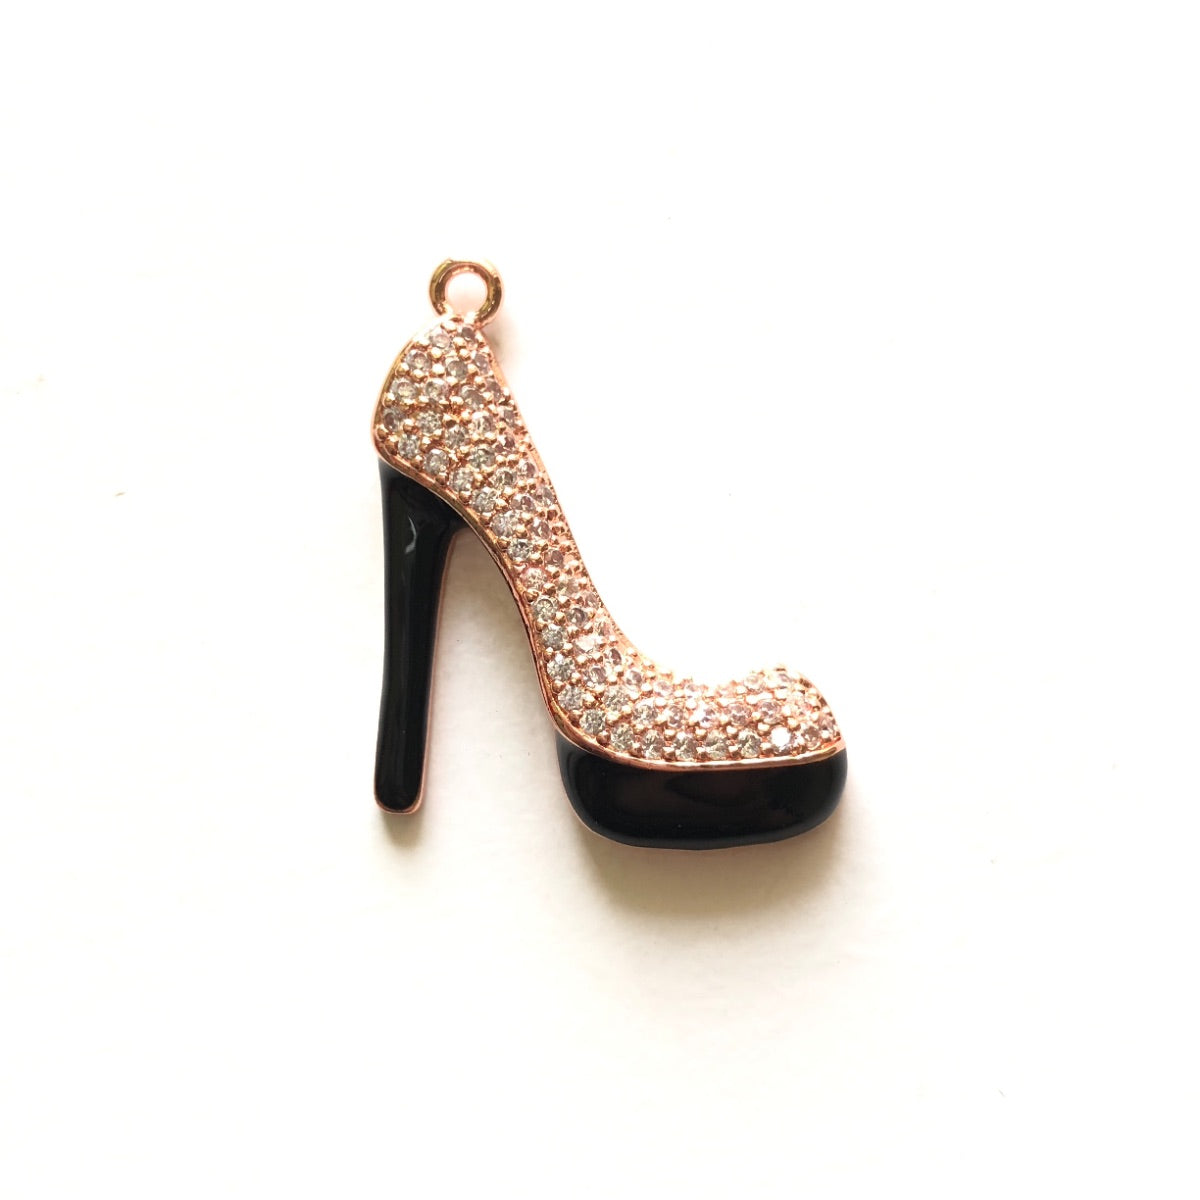 10pcs/lot 27*23mm CZ Paved Black Bottom High Heel Shoe Charms Rose Gold CZ Paved Charms High Heels On Sale Charms Beads Beyond